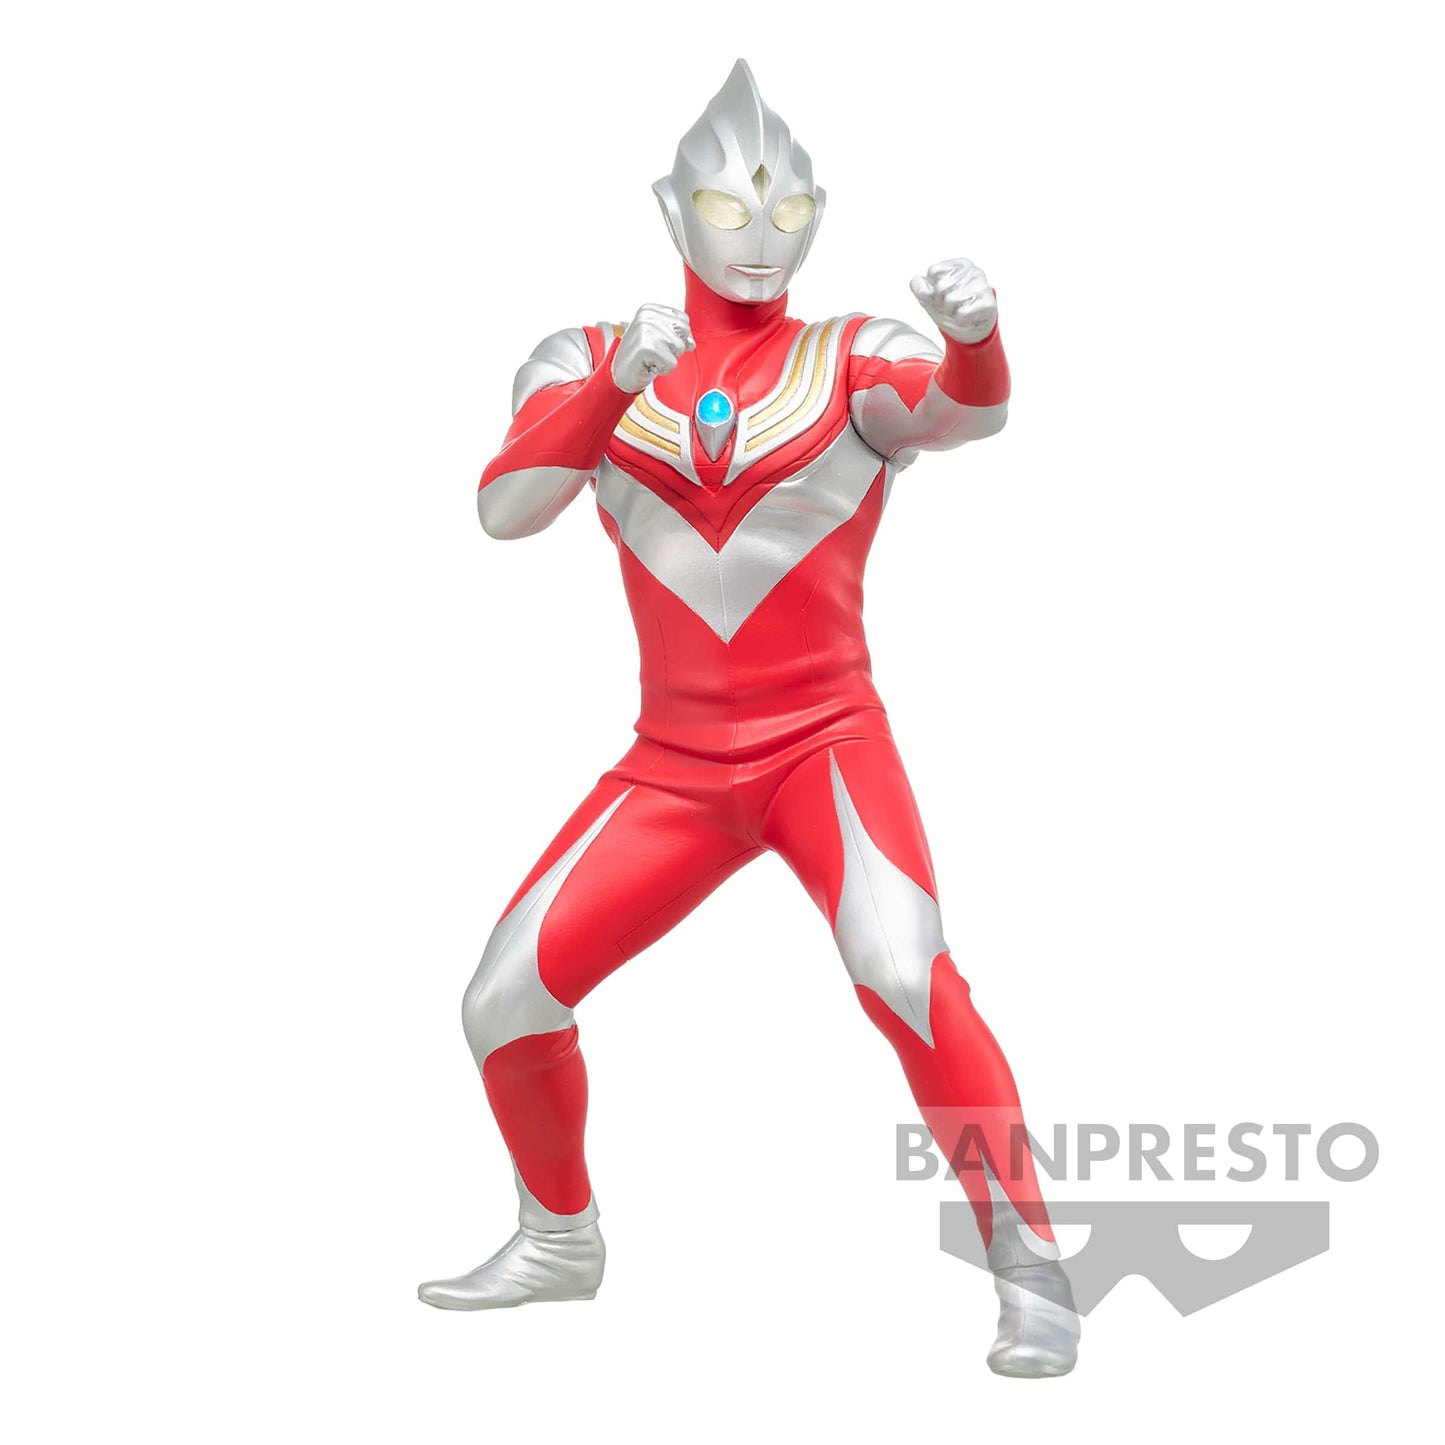 BANPRESTO Ultraman Tiga Ultraman Tiga Hero's Brave Statue Figure (A:Ultrman Tiga Power Type)